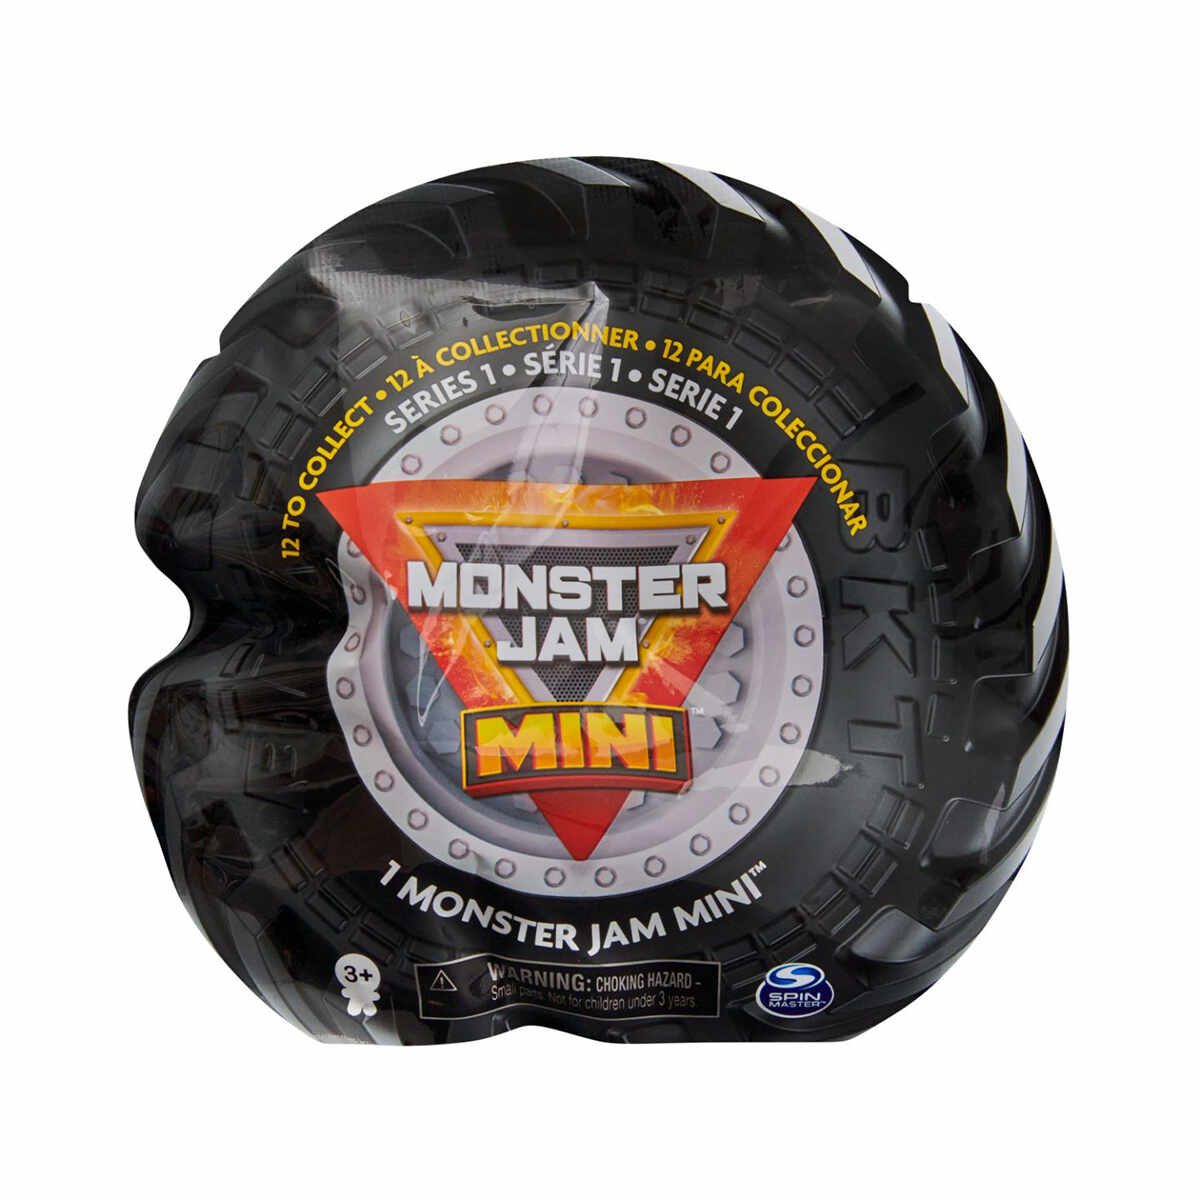 Pachet surpriza, Monster Jam, Mini Masina